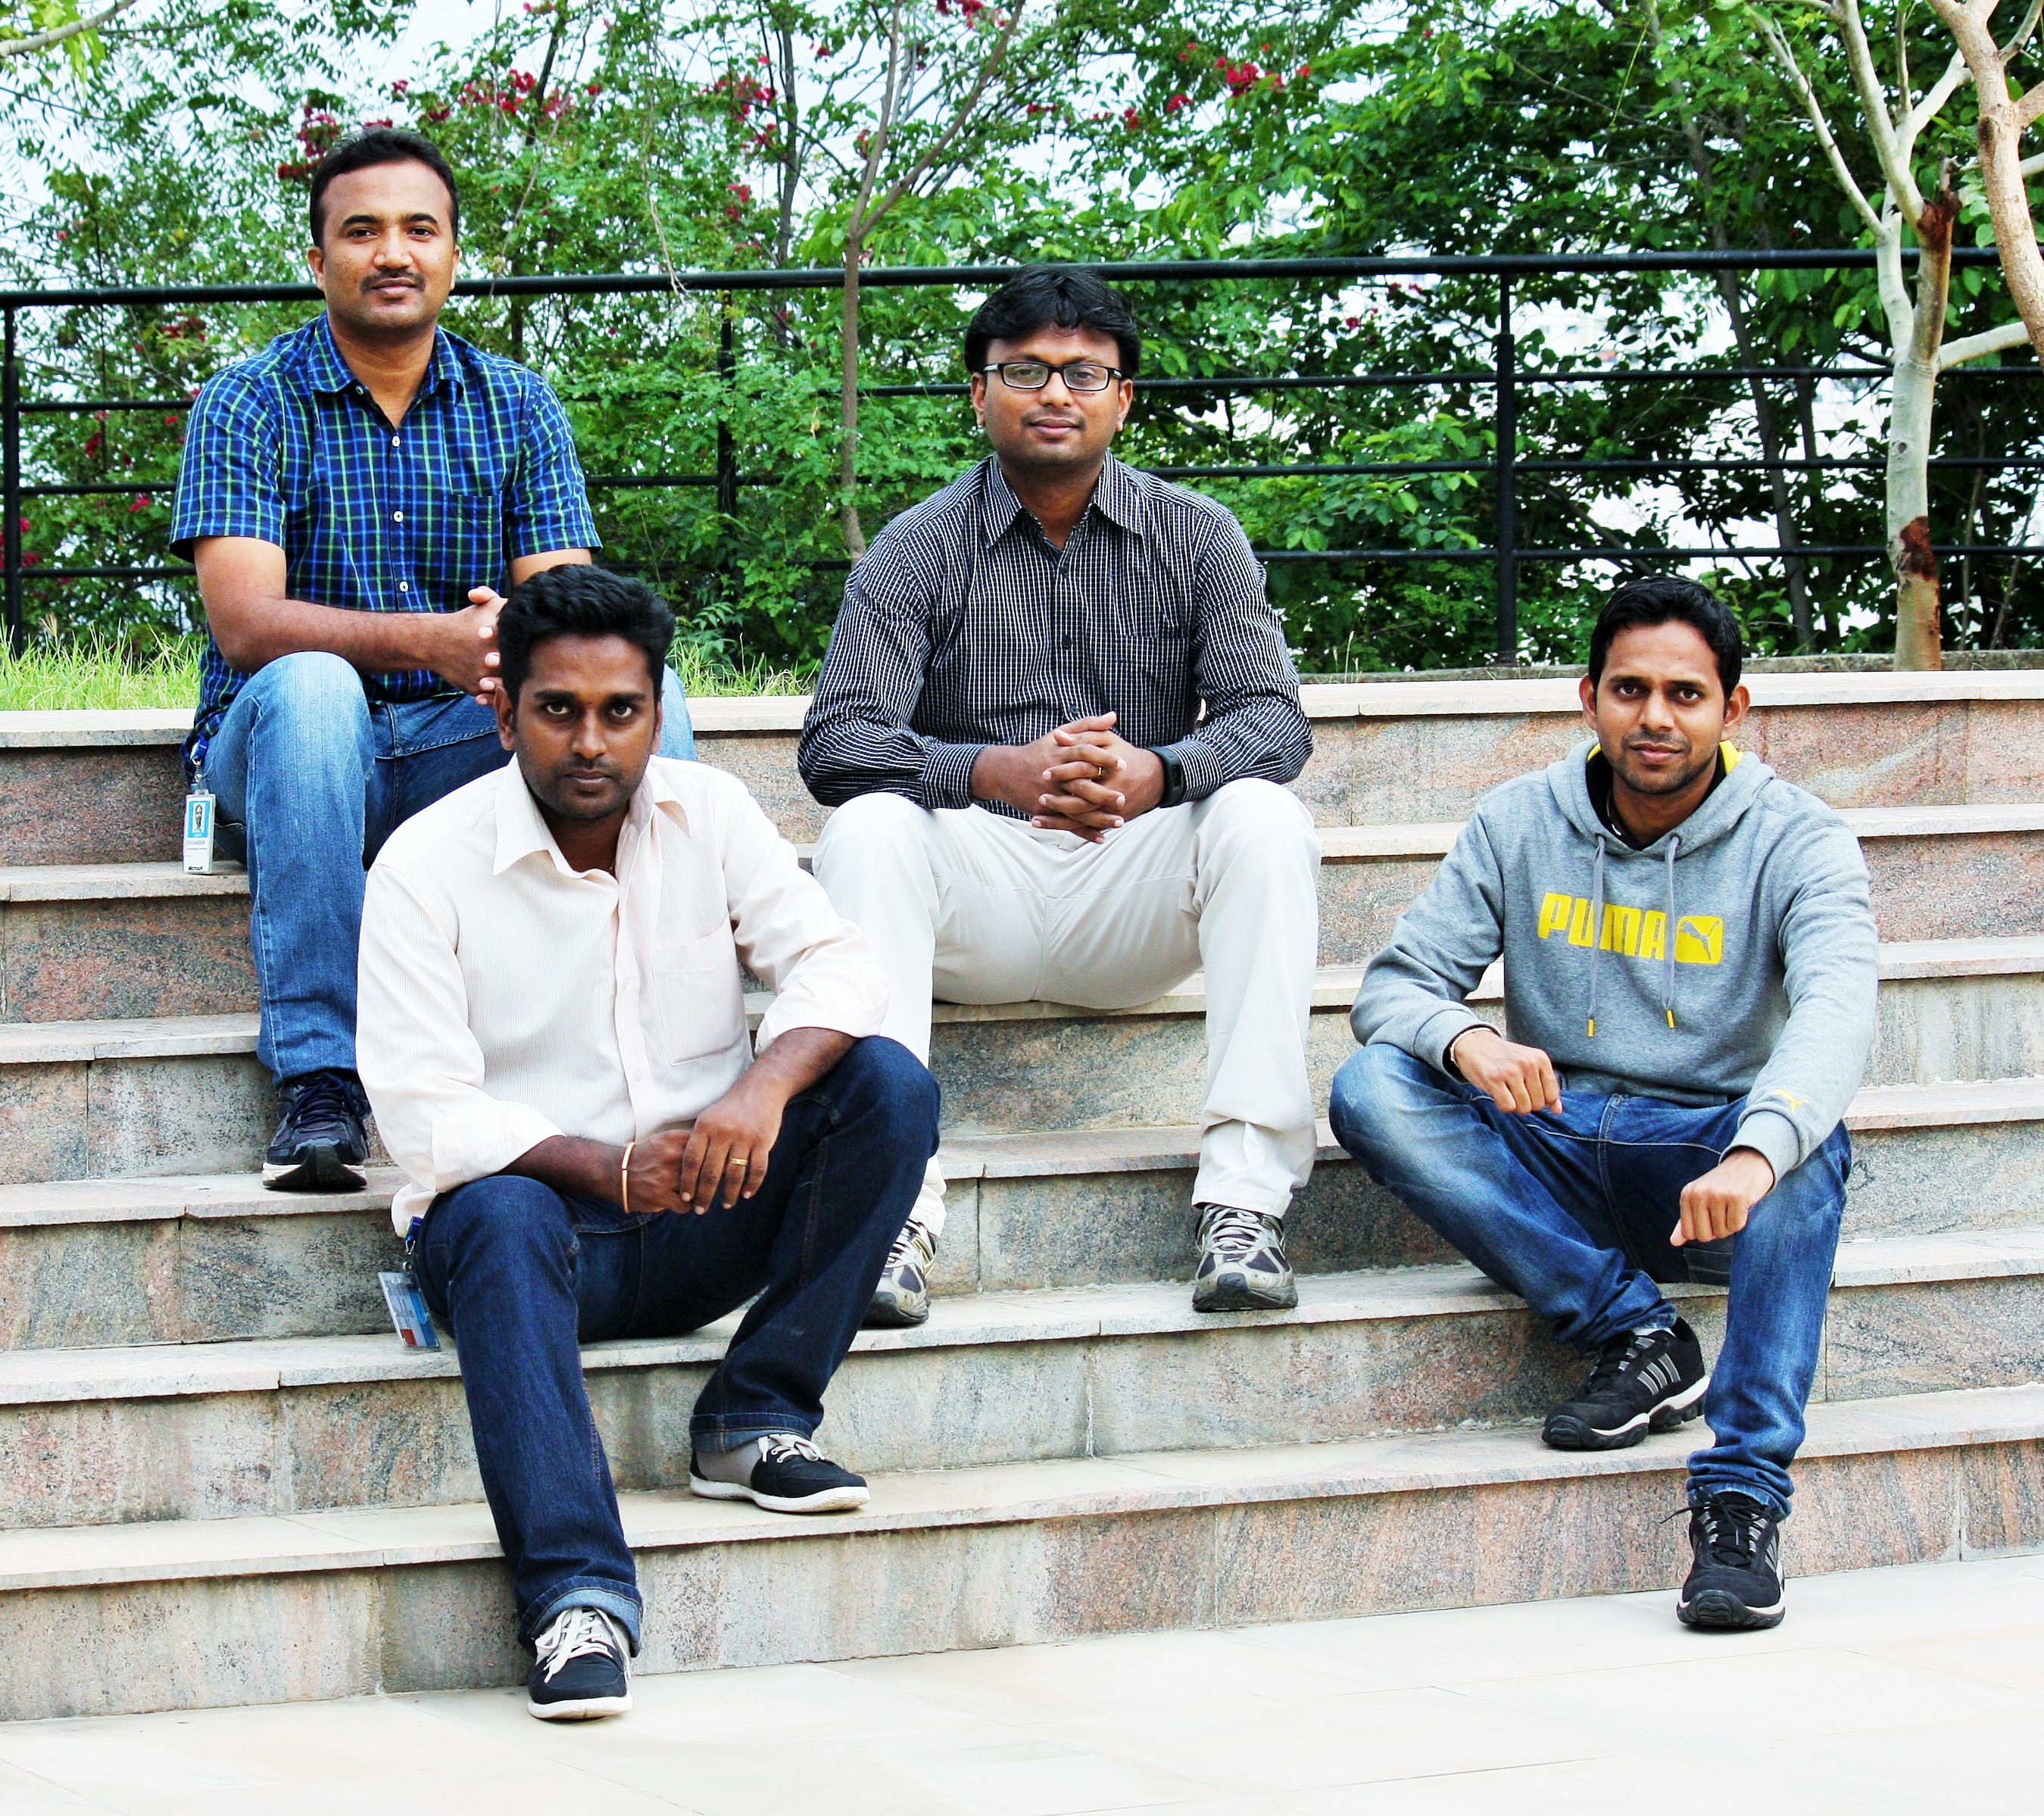 Members of the Cortana vision for Visually Impaired project team in India. From left: Ravishankar Sanjeevaiah, Satish Kumar Kannan, Felix Devarajan and Abhijit Digambar Bhadre. Not pictured: Shree Lakshmi Rao, Andrew Puhl and Satish Peri.